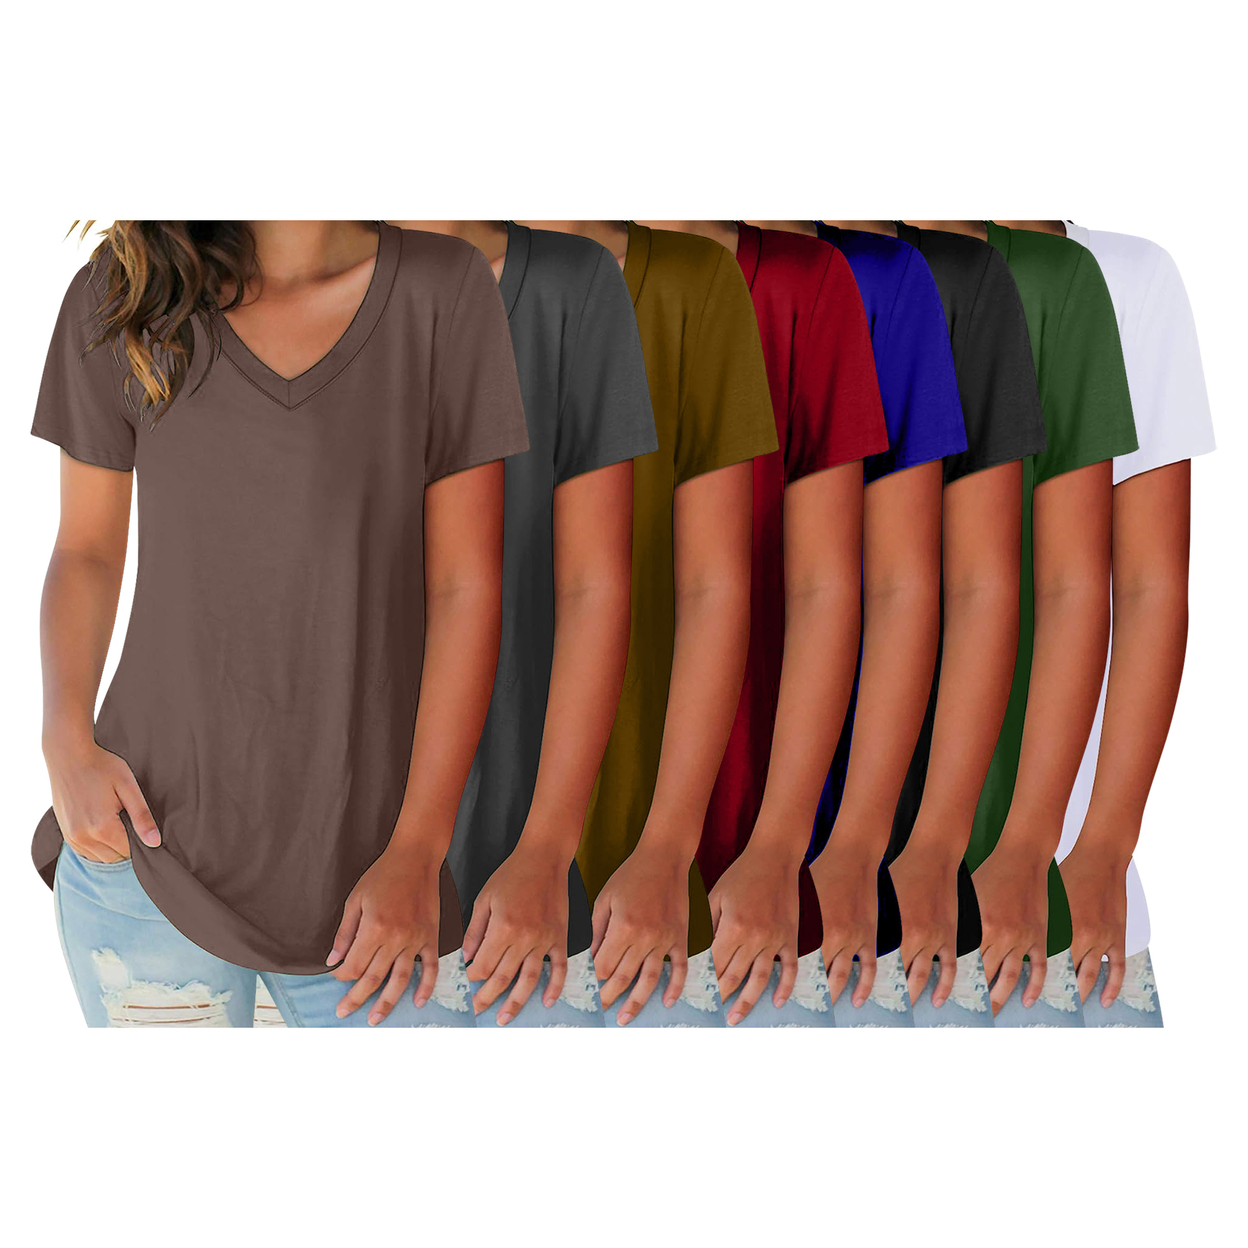 2-Pack: Women's Ultra Soft Smooth Cotton Blend Basic V-Neck Short Sleeve Shirts - Navy & Brown, Xx-large